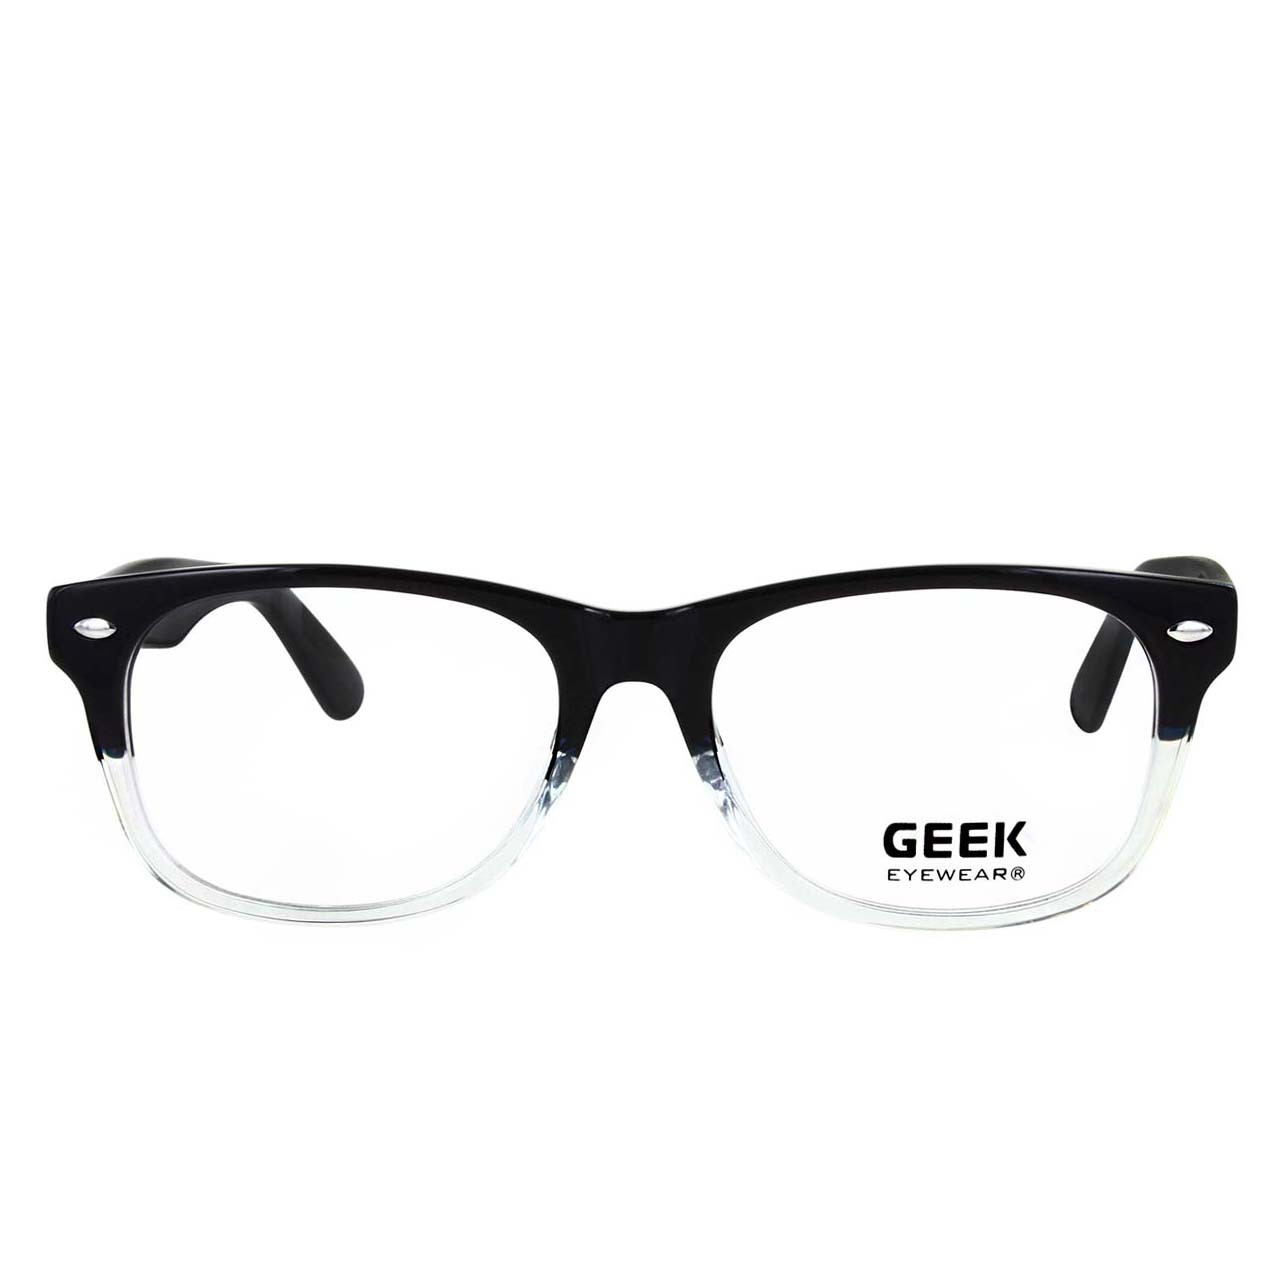 GEEK Eyewear Geek RAD 09 with Blue Light Filter Lenses